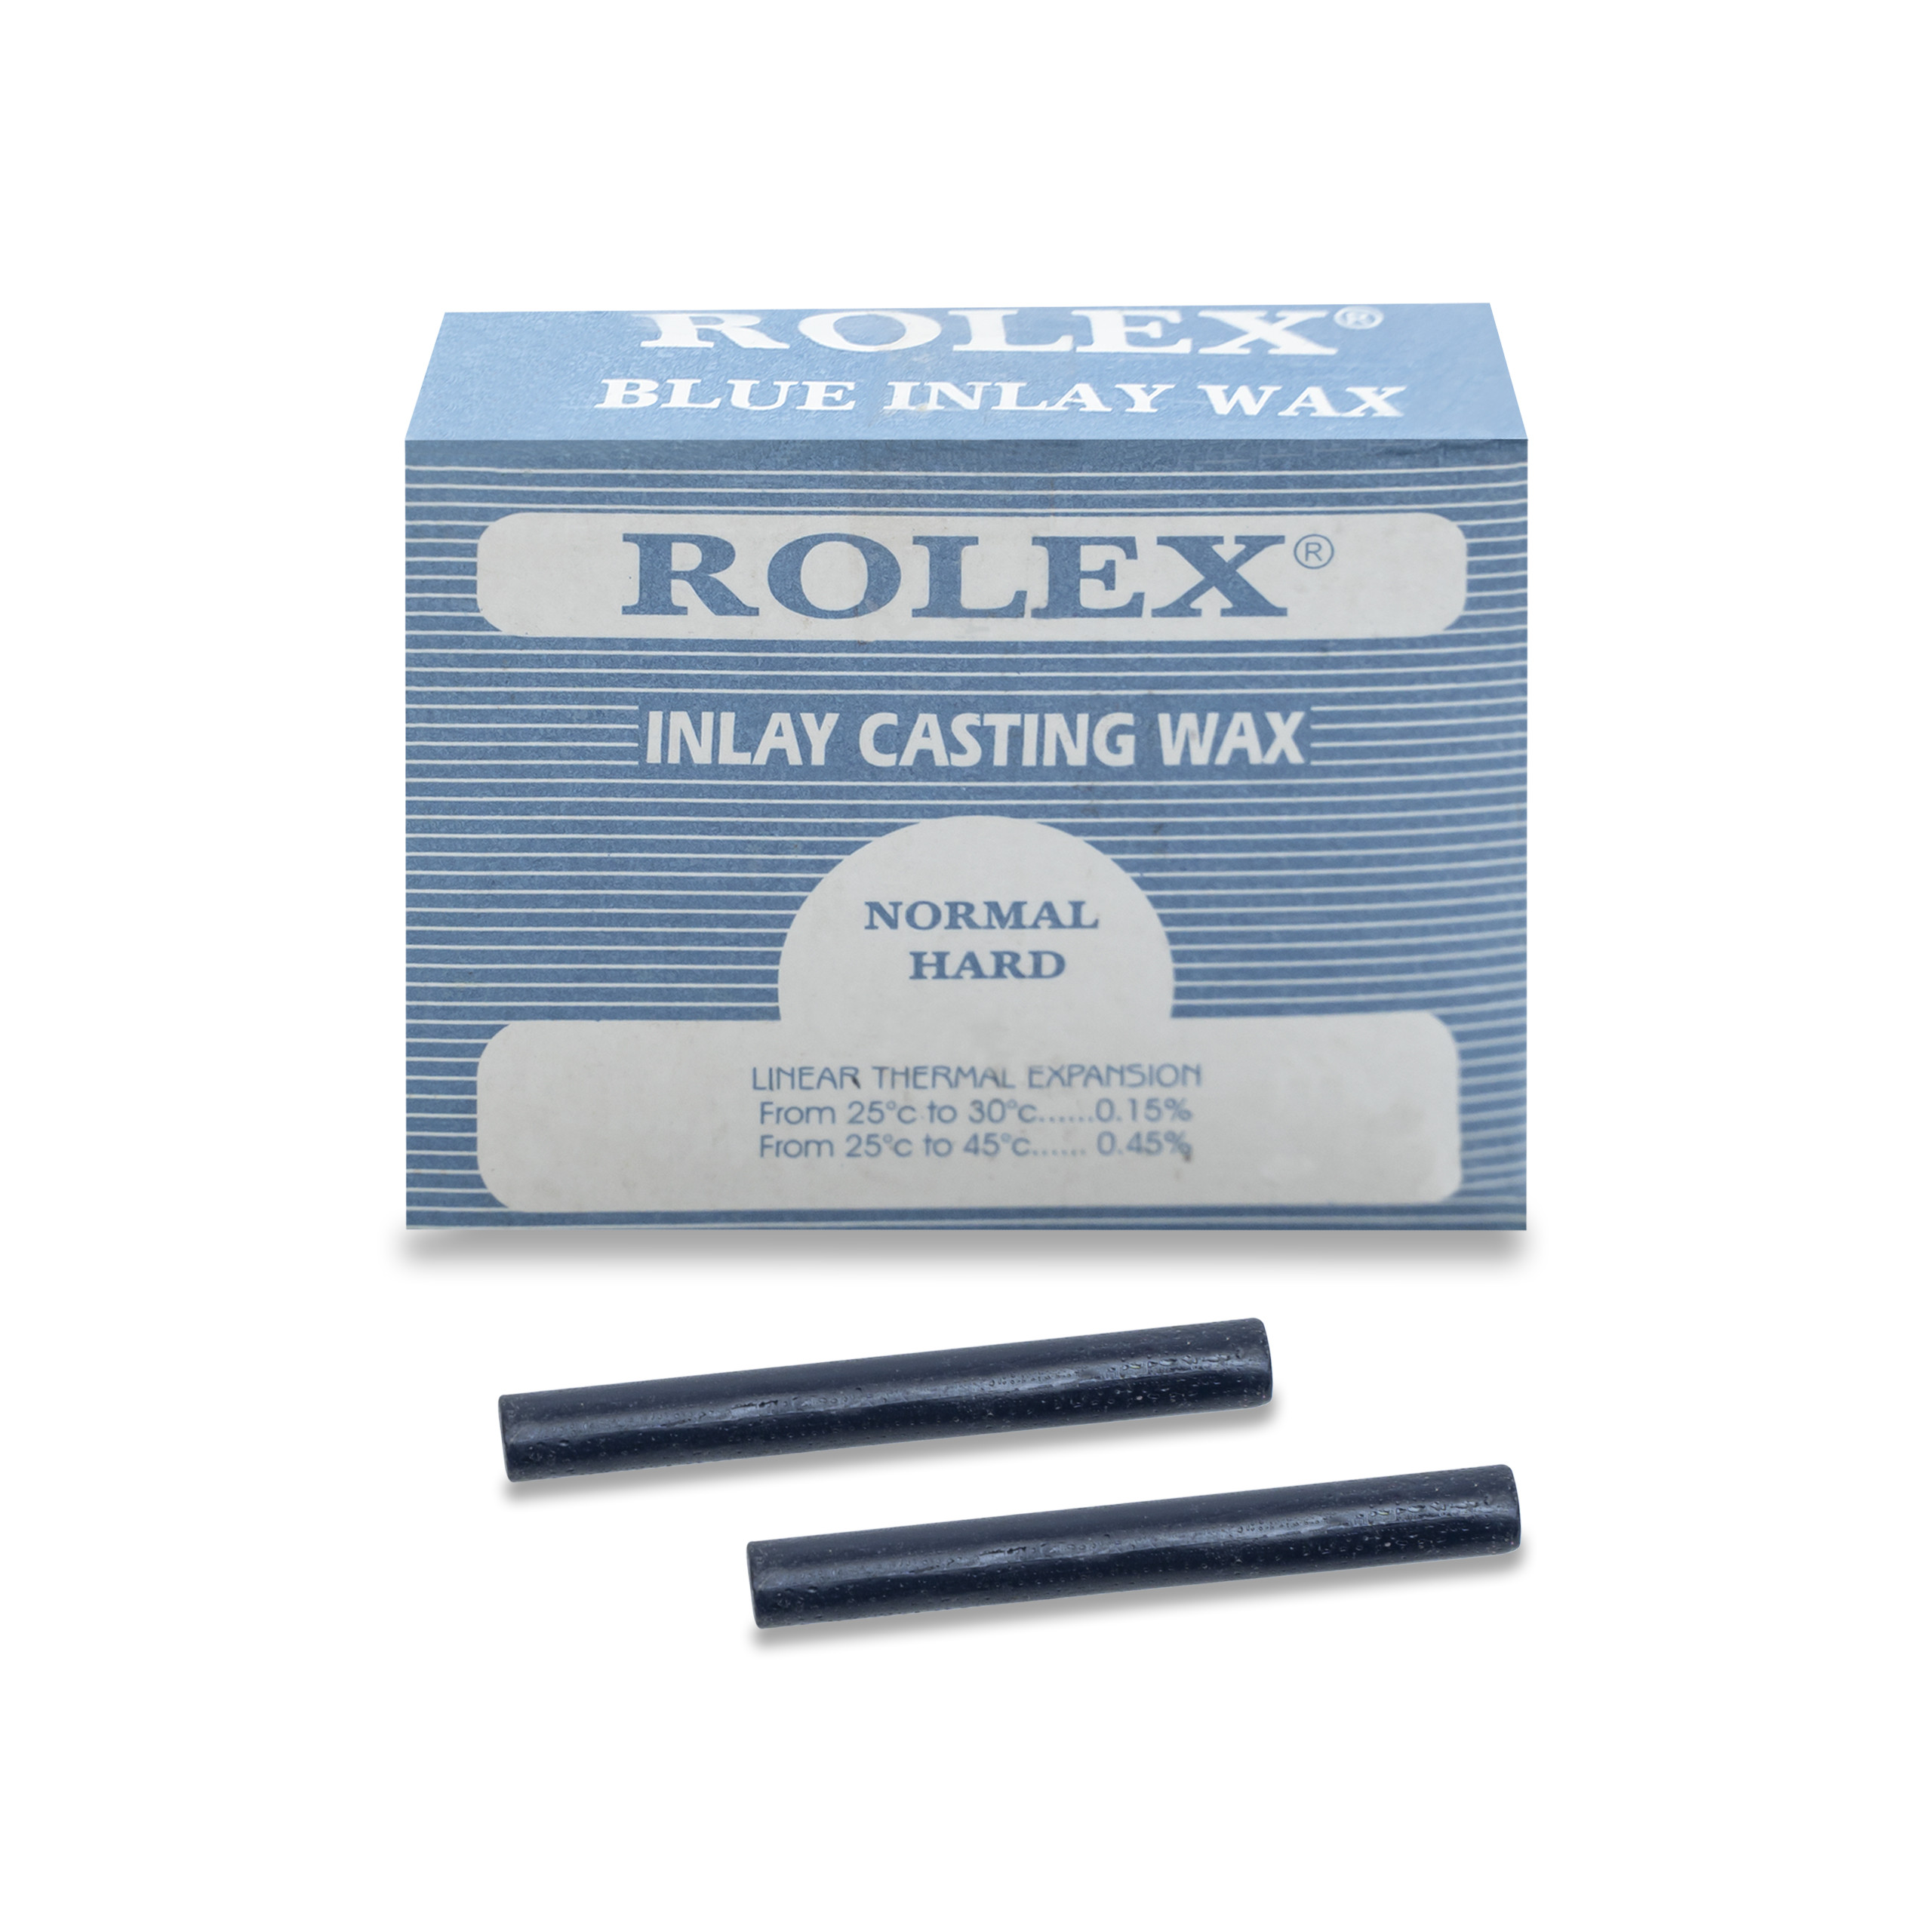 Rolex Inlay Casting Wax